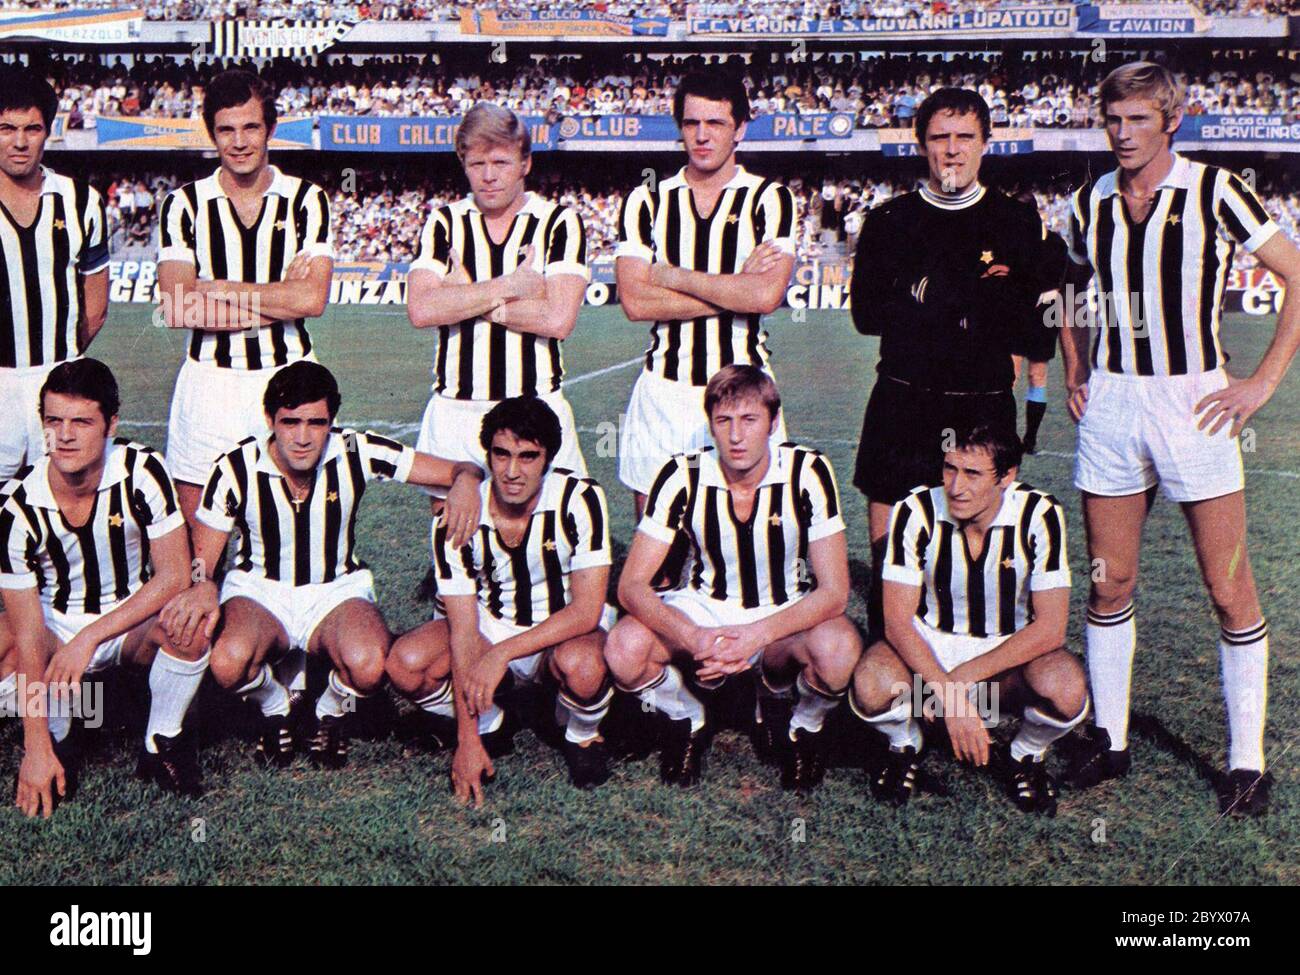 Von links nach rechts stehend: S. Salvadore (Kapitän), L. Spinosi, H. Haller, R. Bettega, R. Tancredi, F. Morini; geduckt: F. Capello, A. Cuccurreddu, P. Anastasi, G. Marchetti, G. Furino Stockfoto